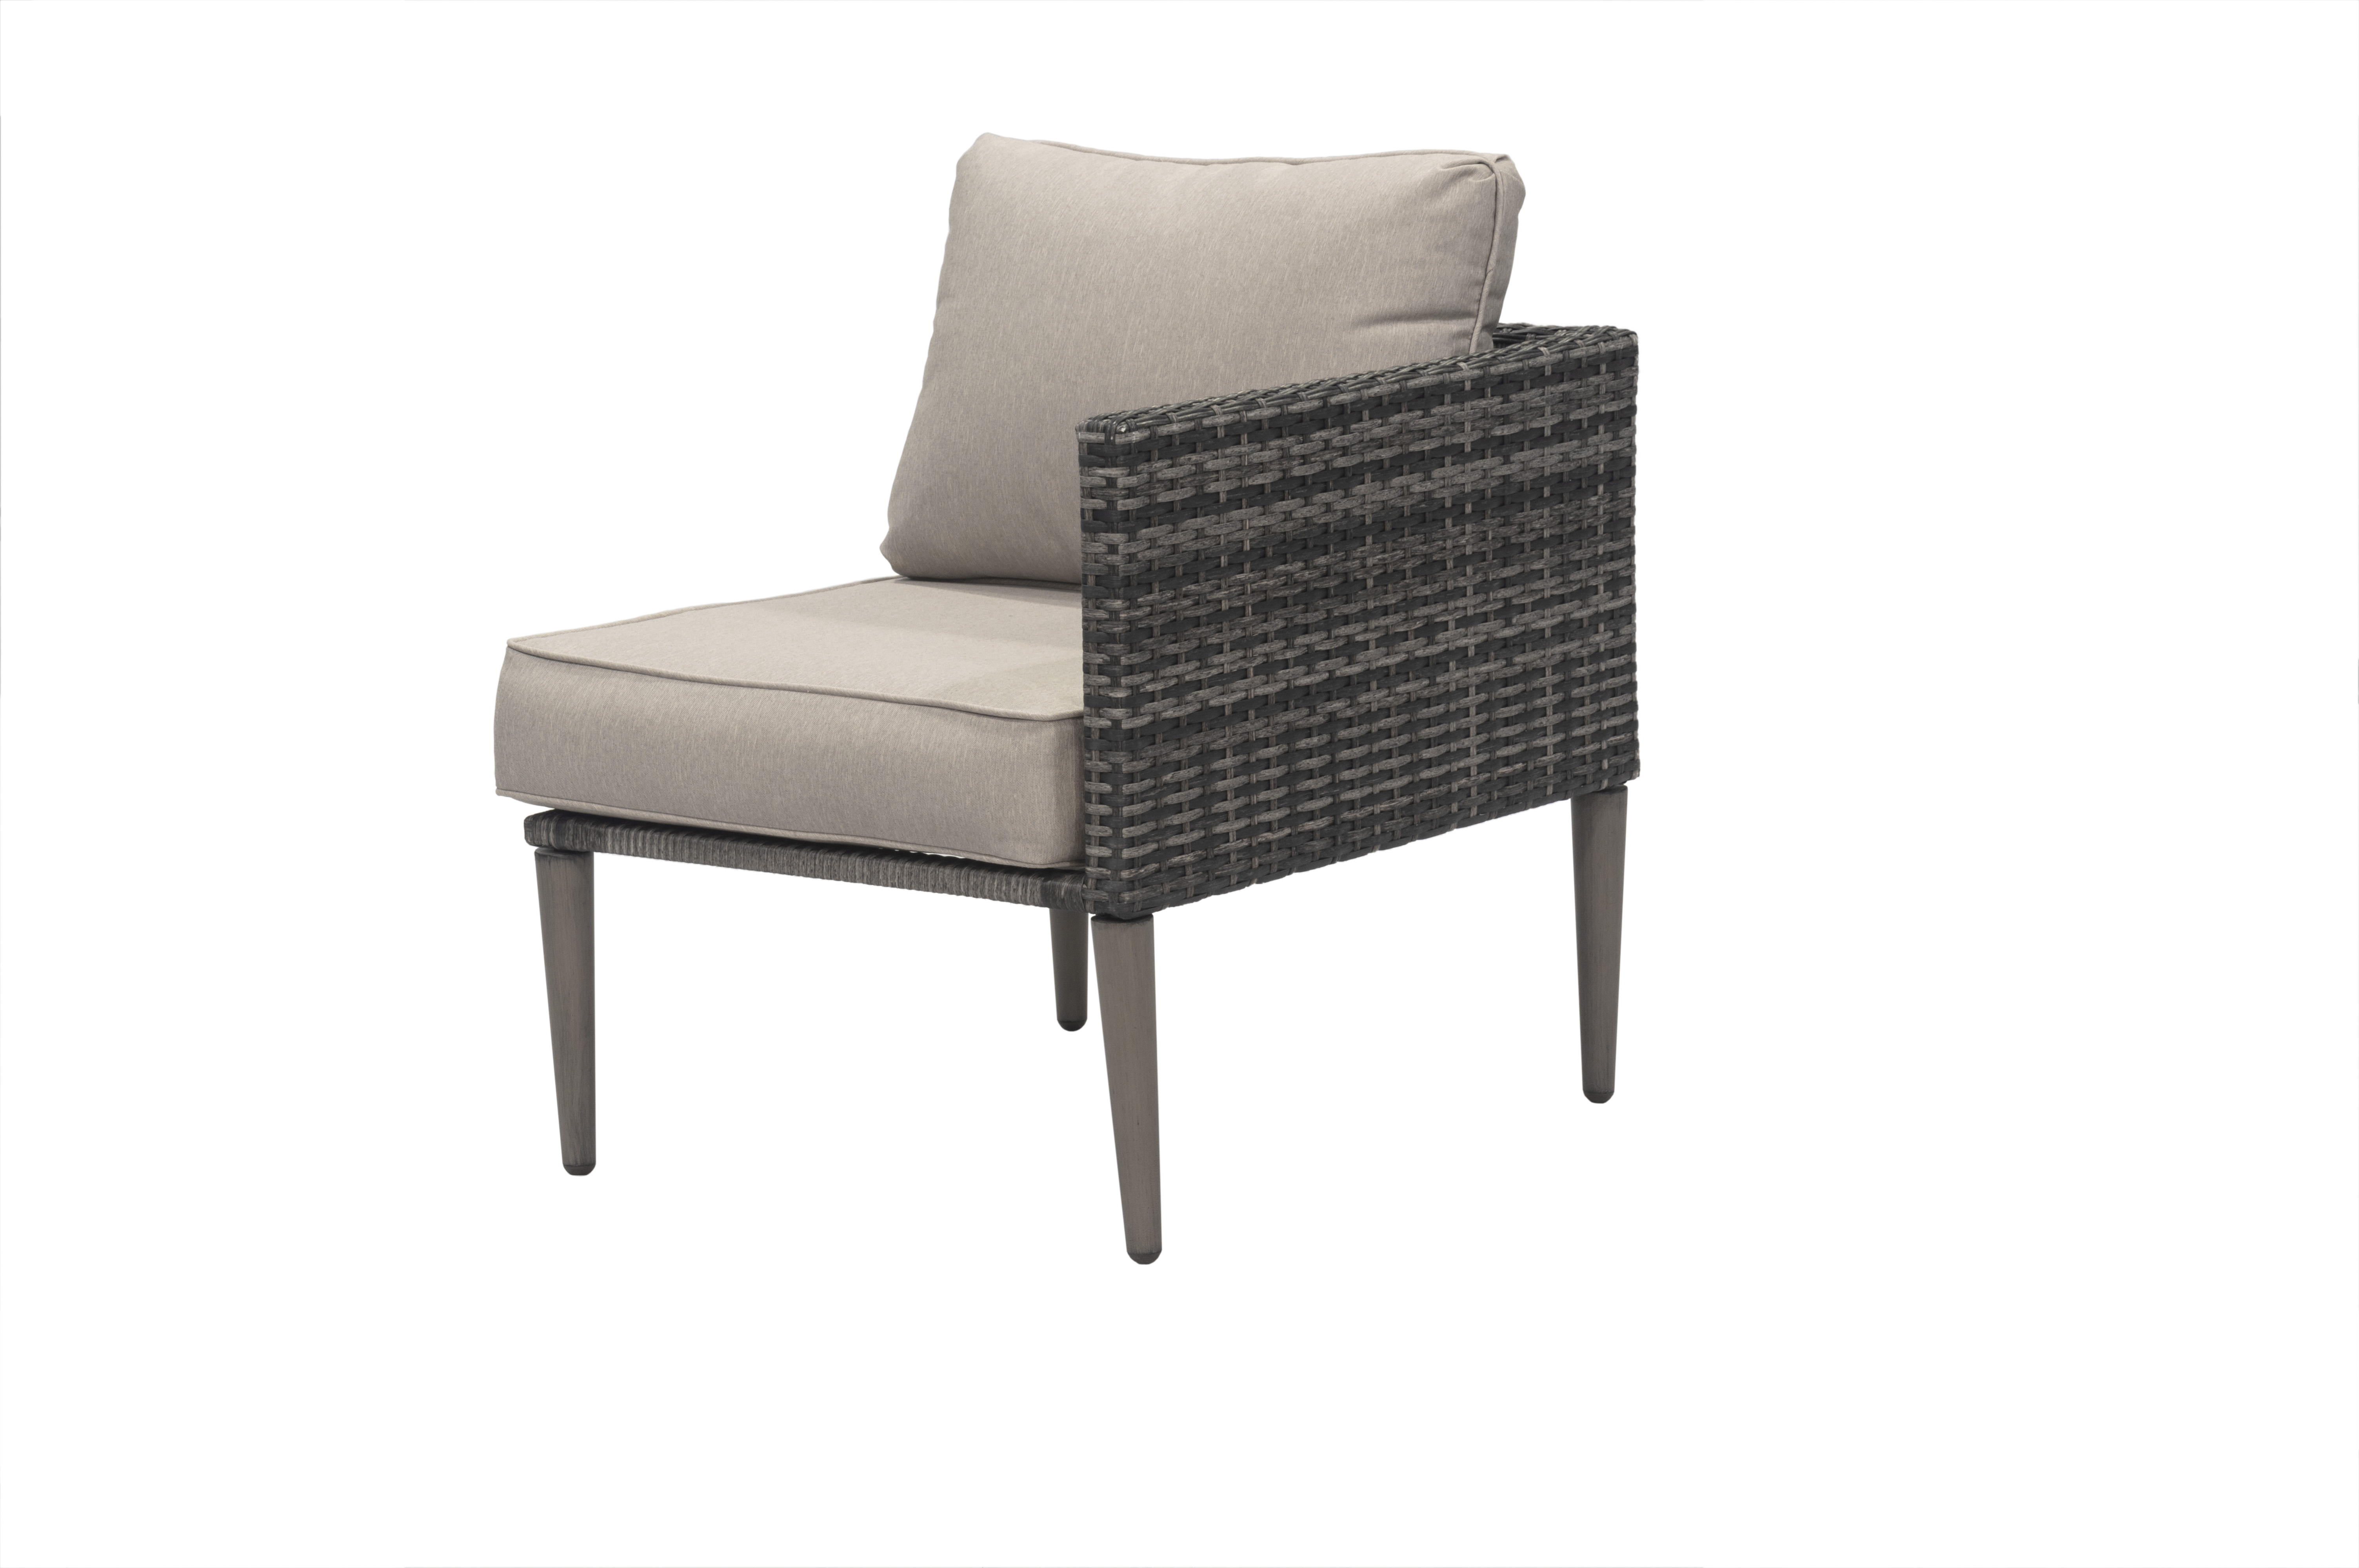 Donglin Outdoor Patio Furniture Sutton Creek 7-Piece Steel Sectional Sofa PE Wicker Rattan Set,Gray - image 6 of 16